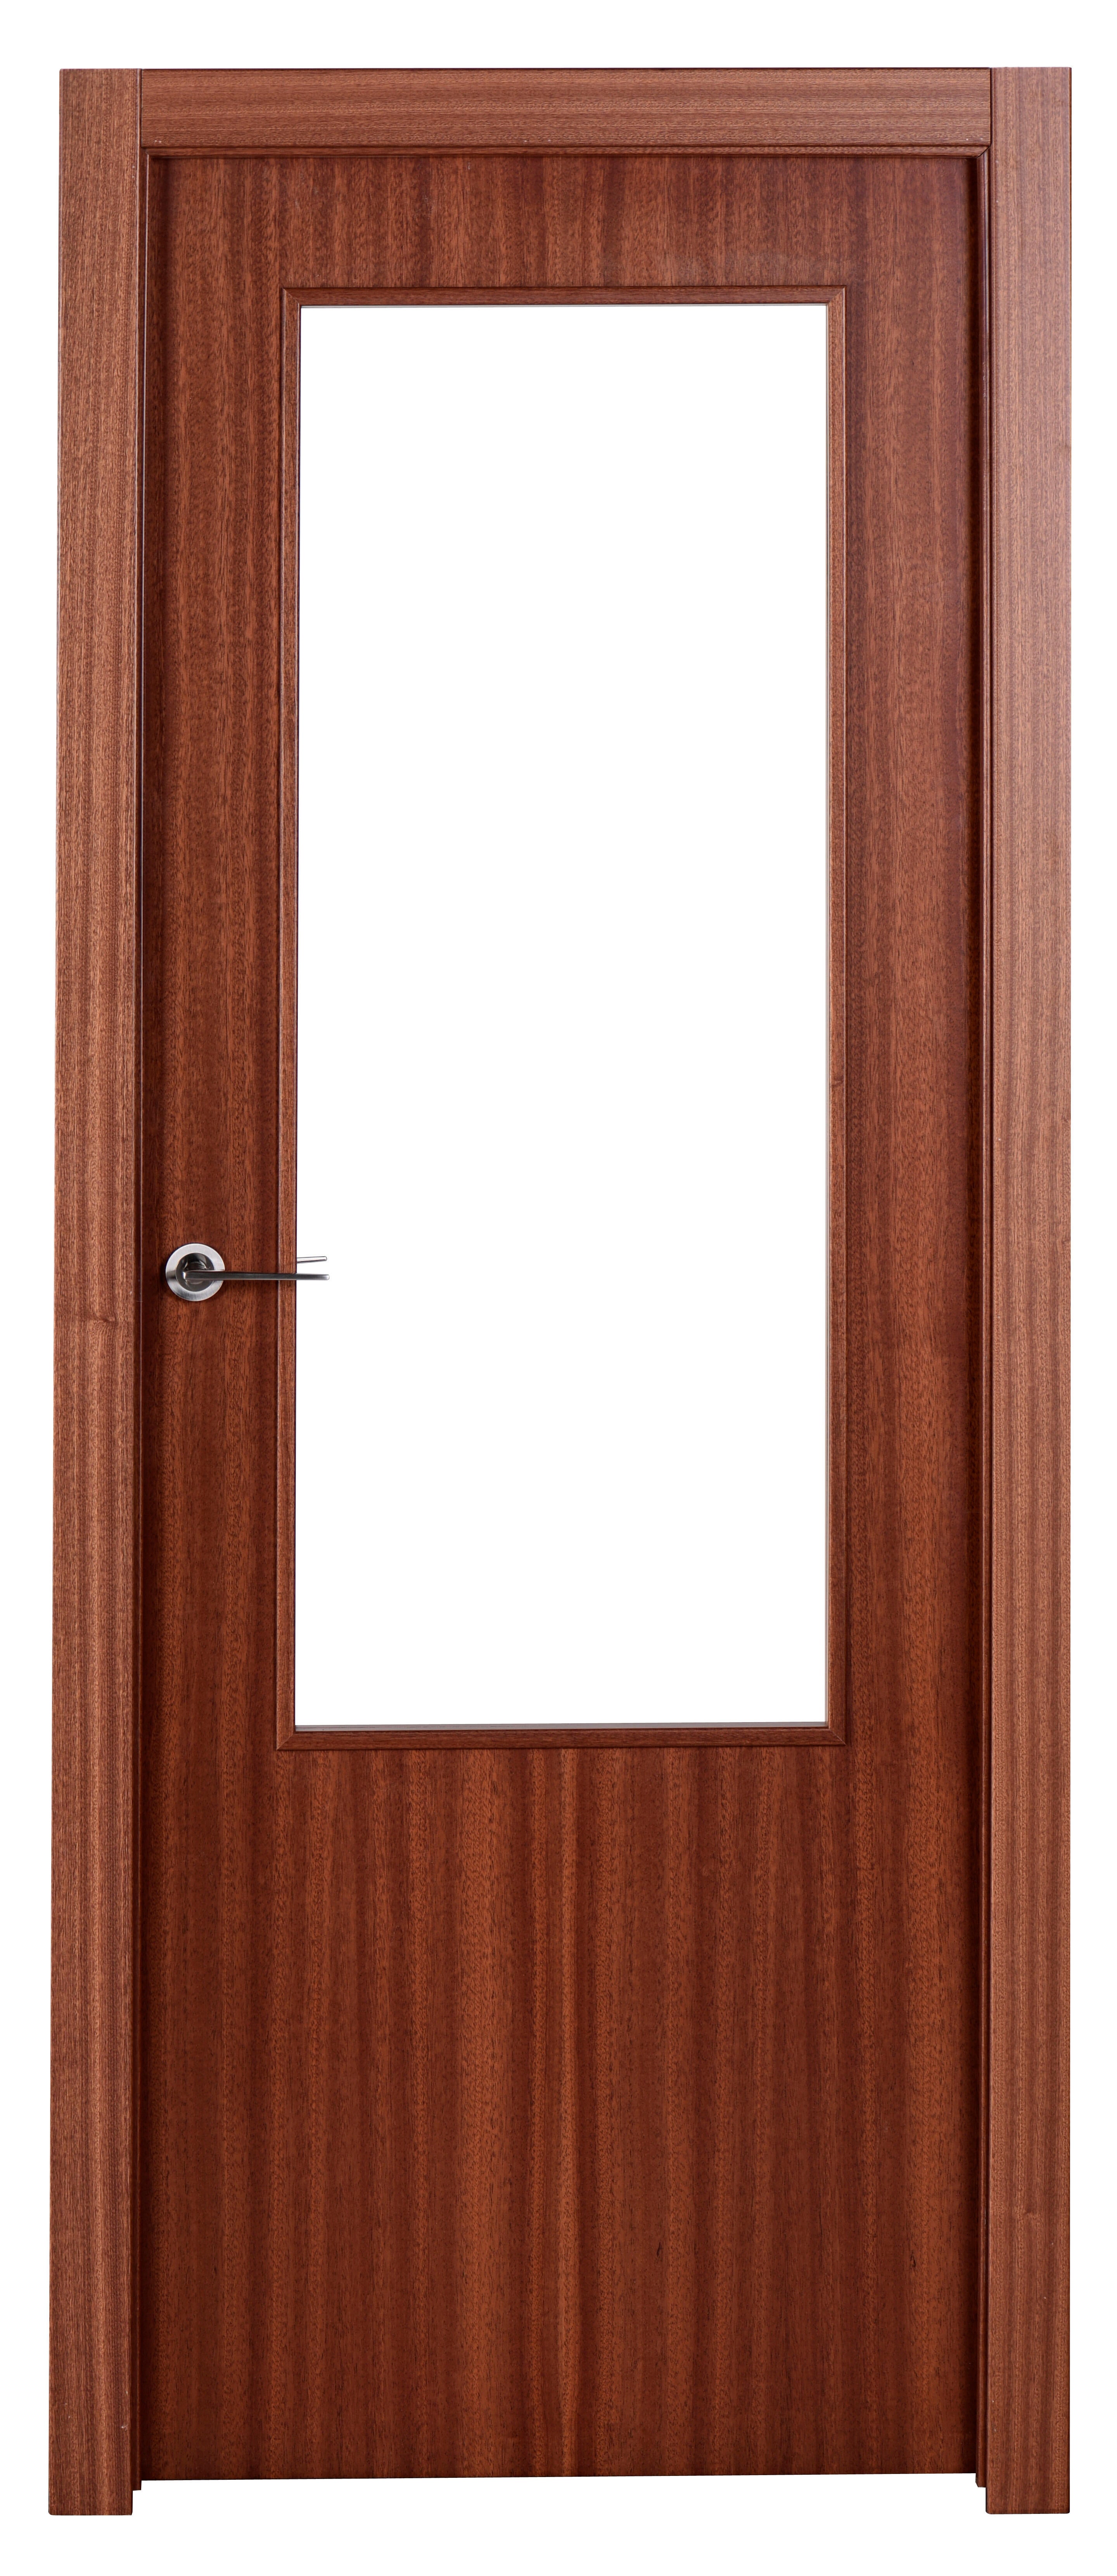 Puerta lisboa plus sapelly apertura derecha con cristal 9x72.5cm